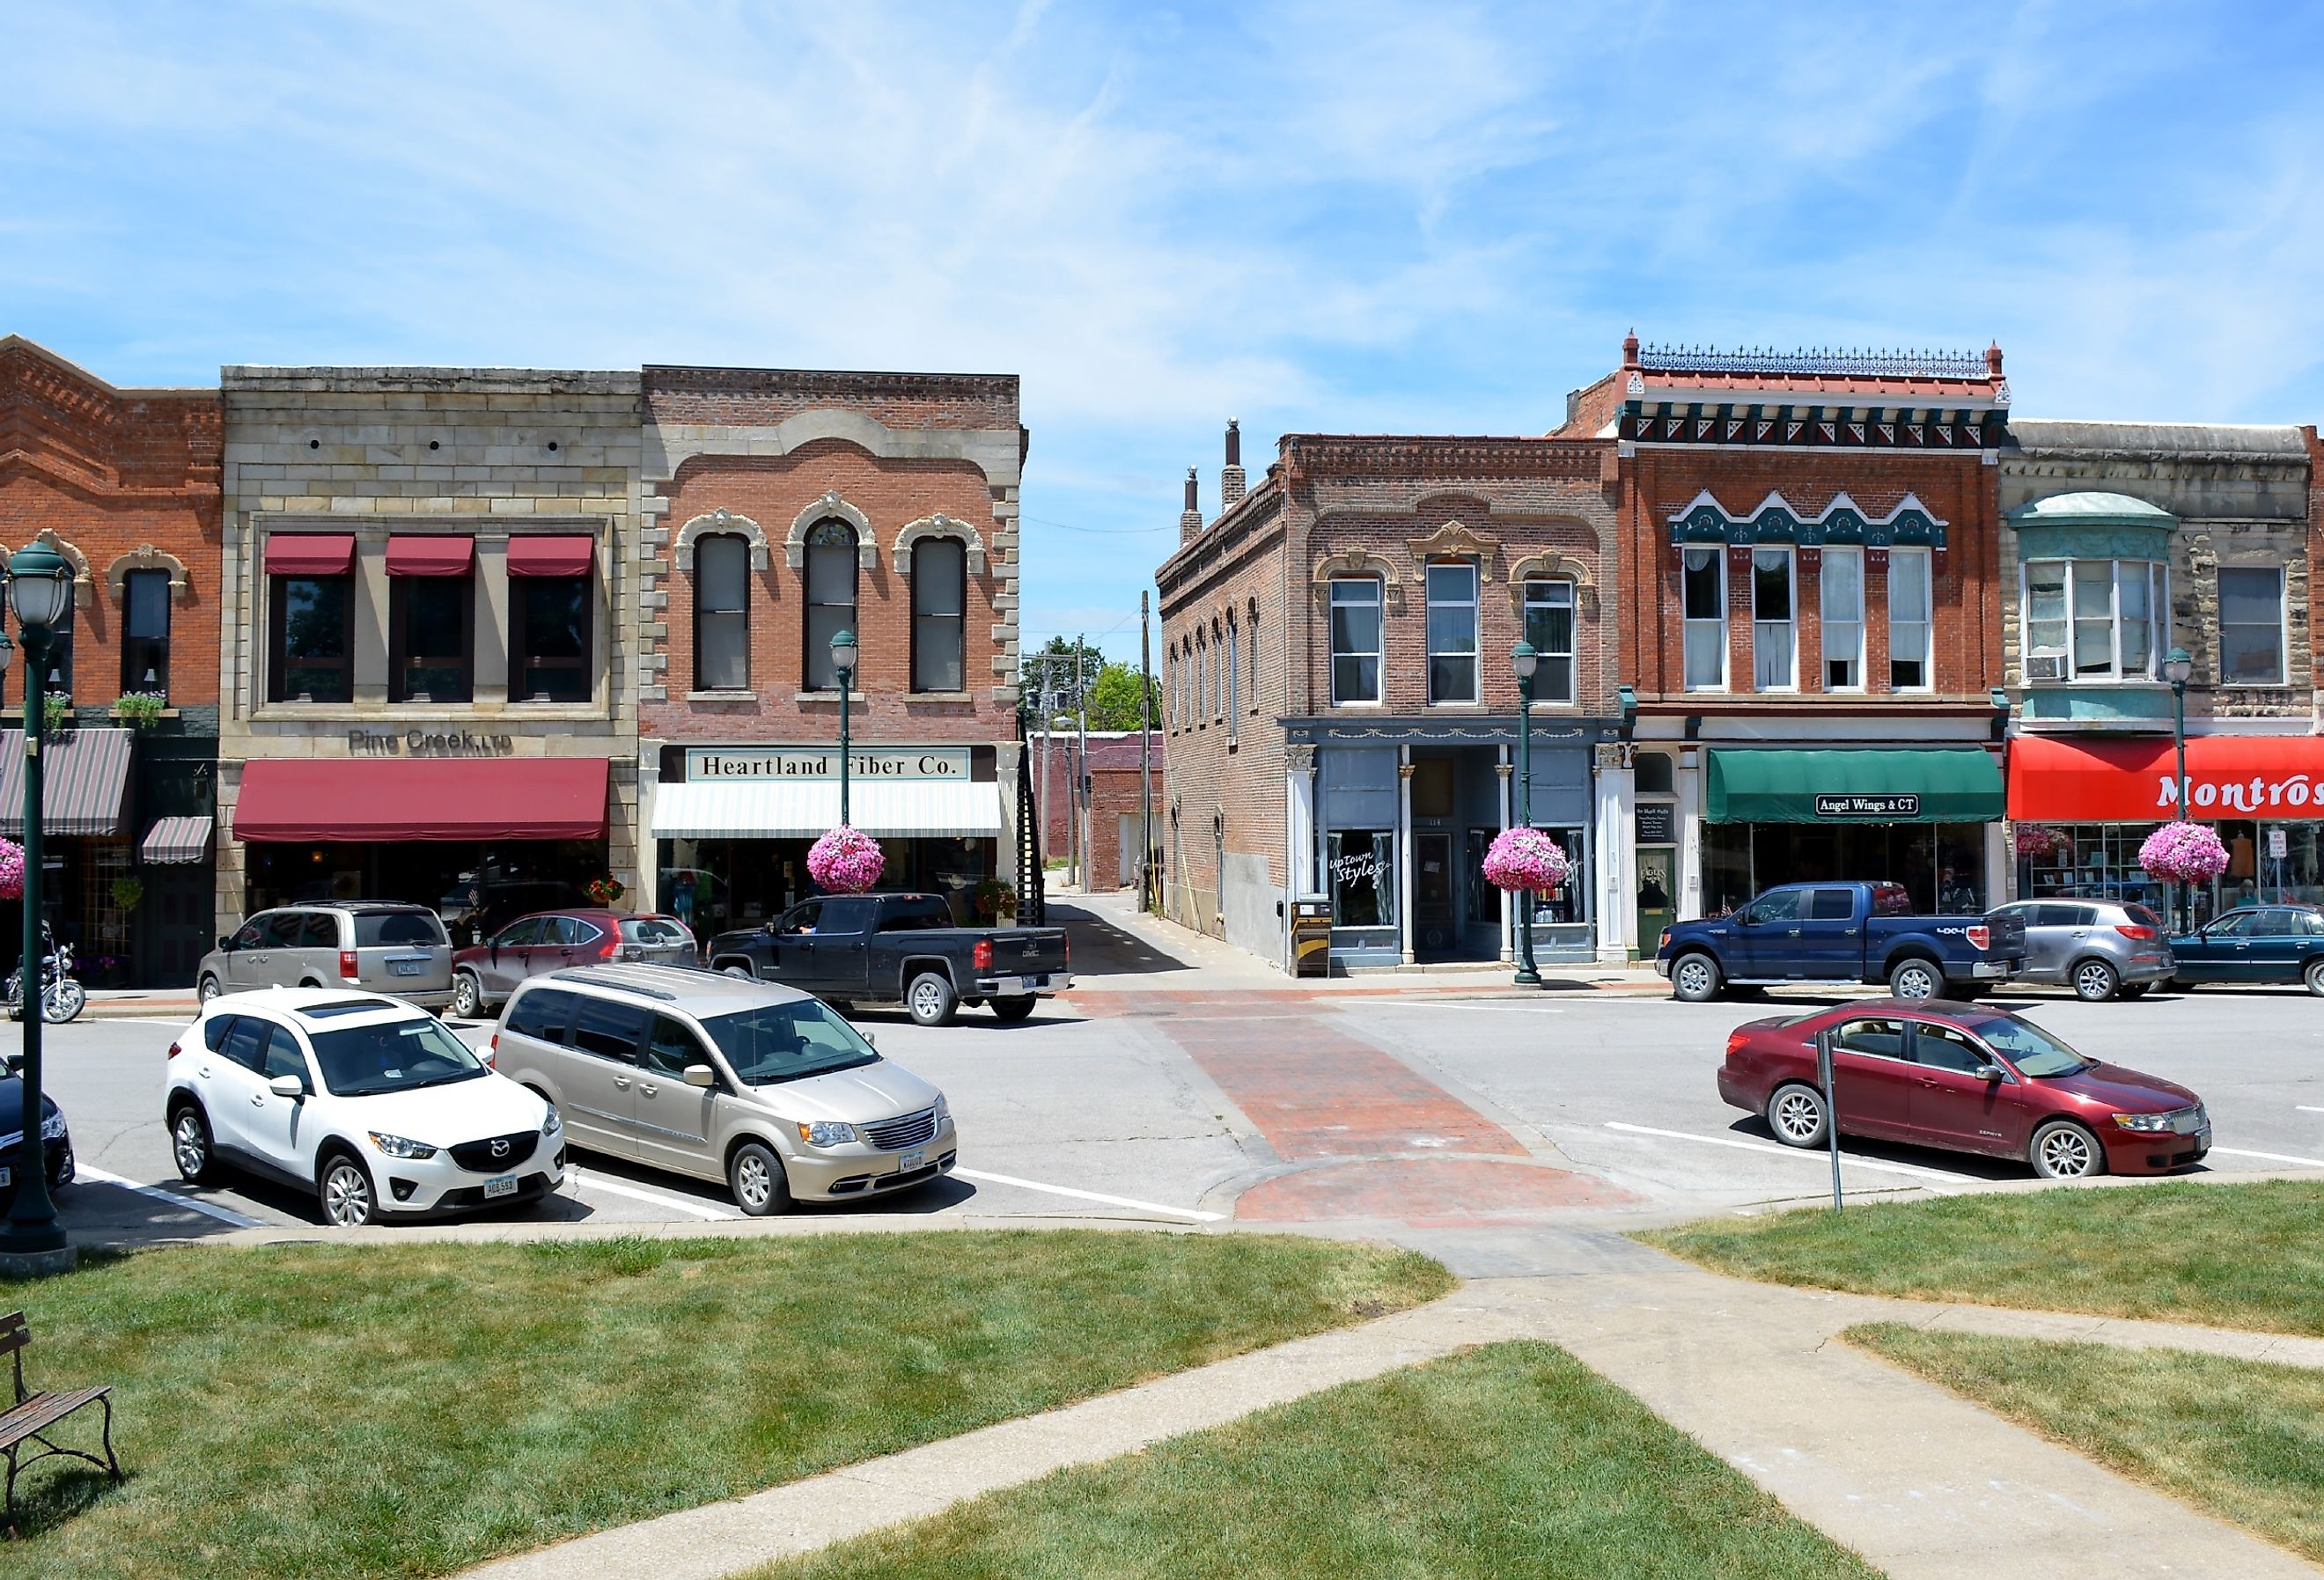 Downtown Winterset, Iowa. Image credit dustin77a via Shutterstock